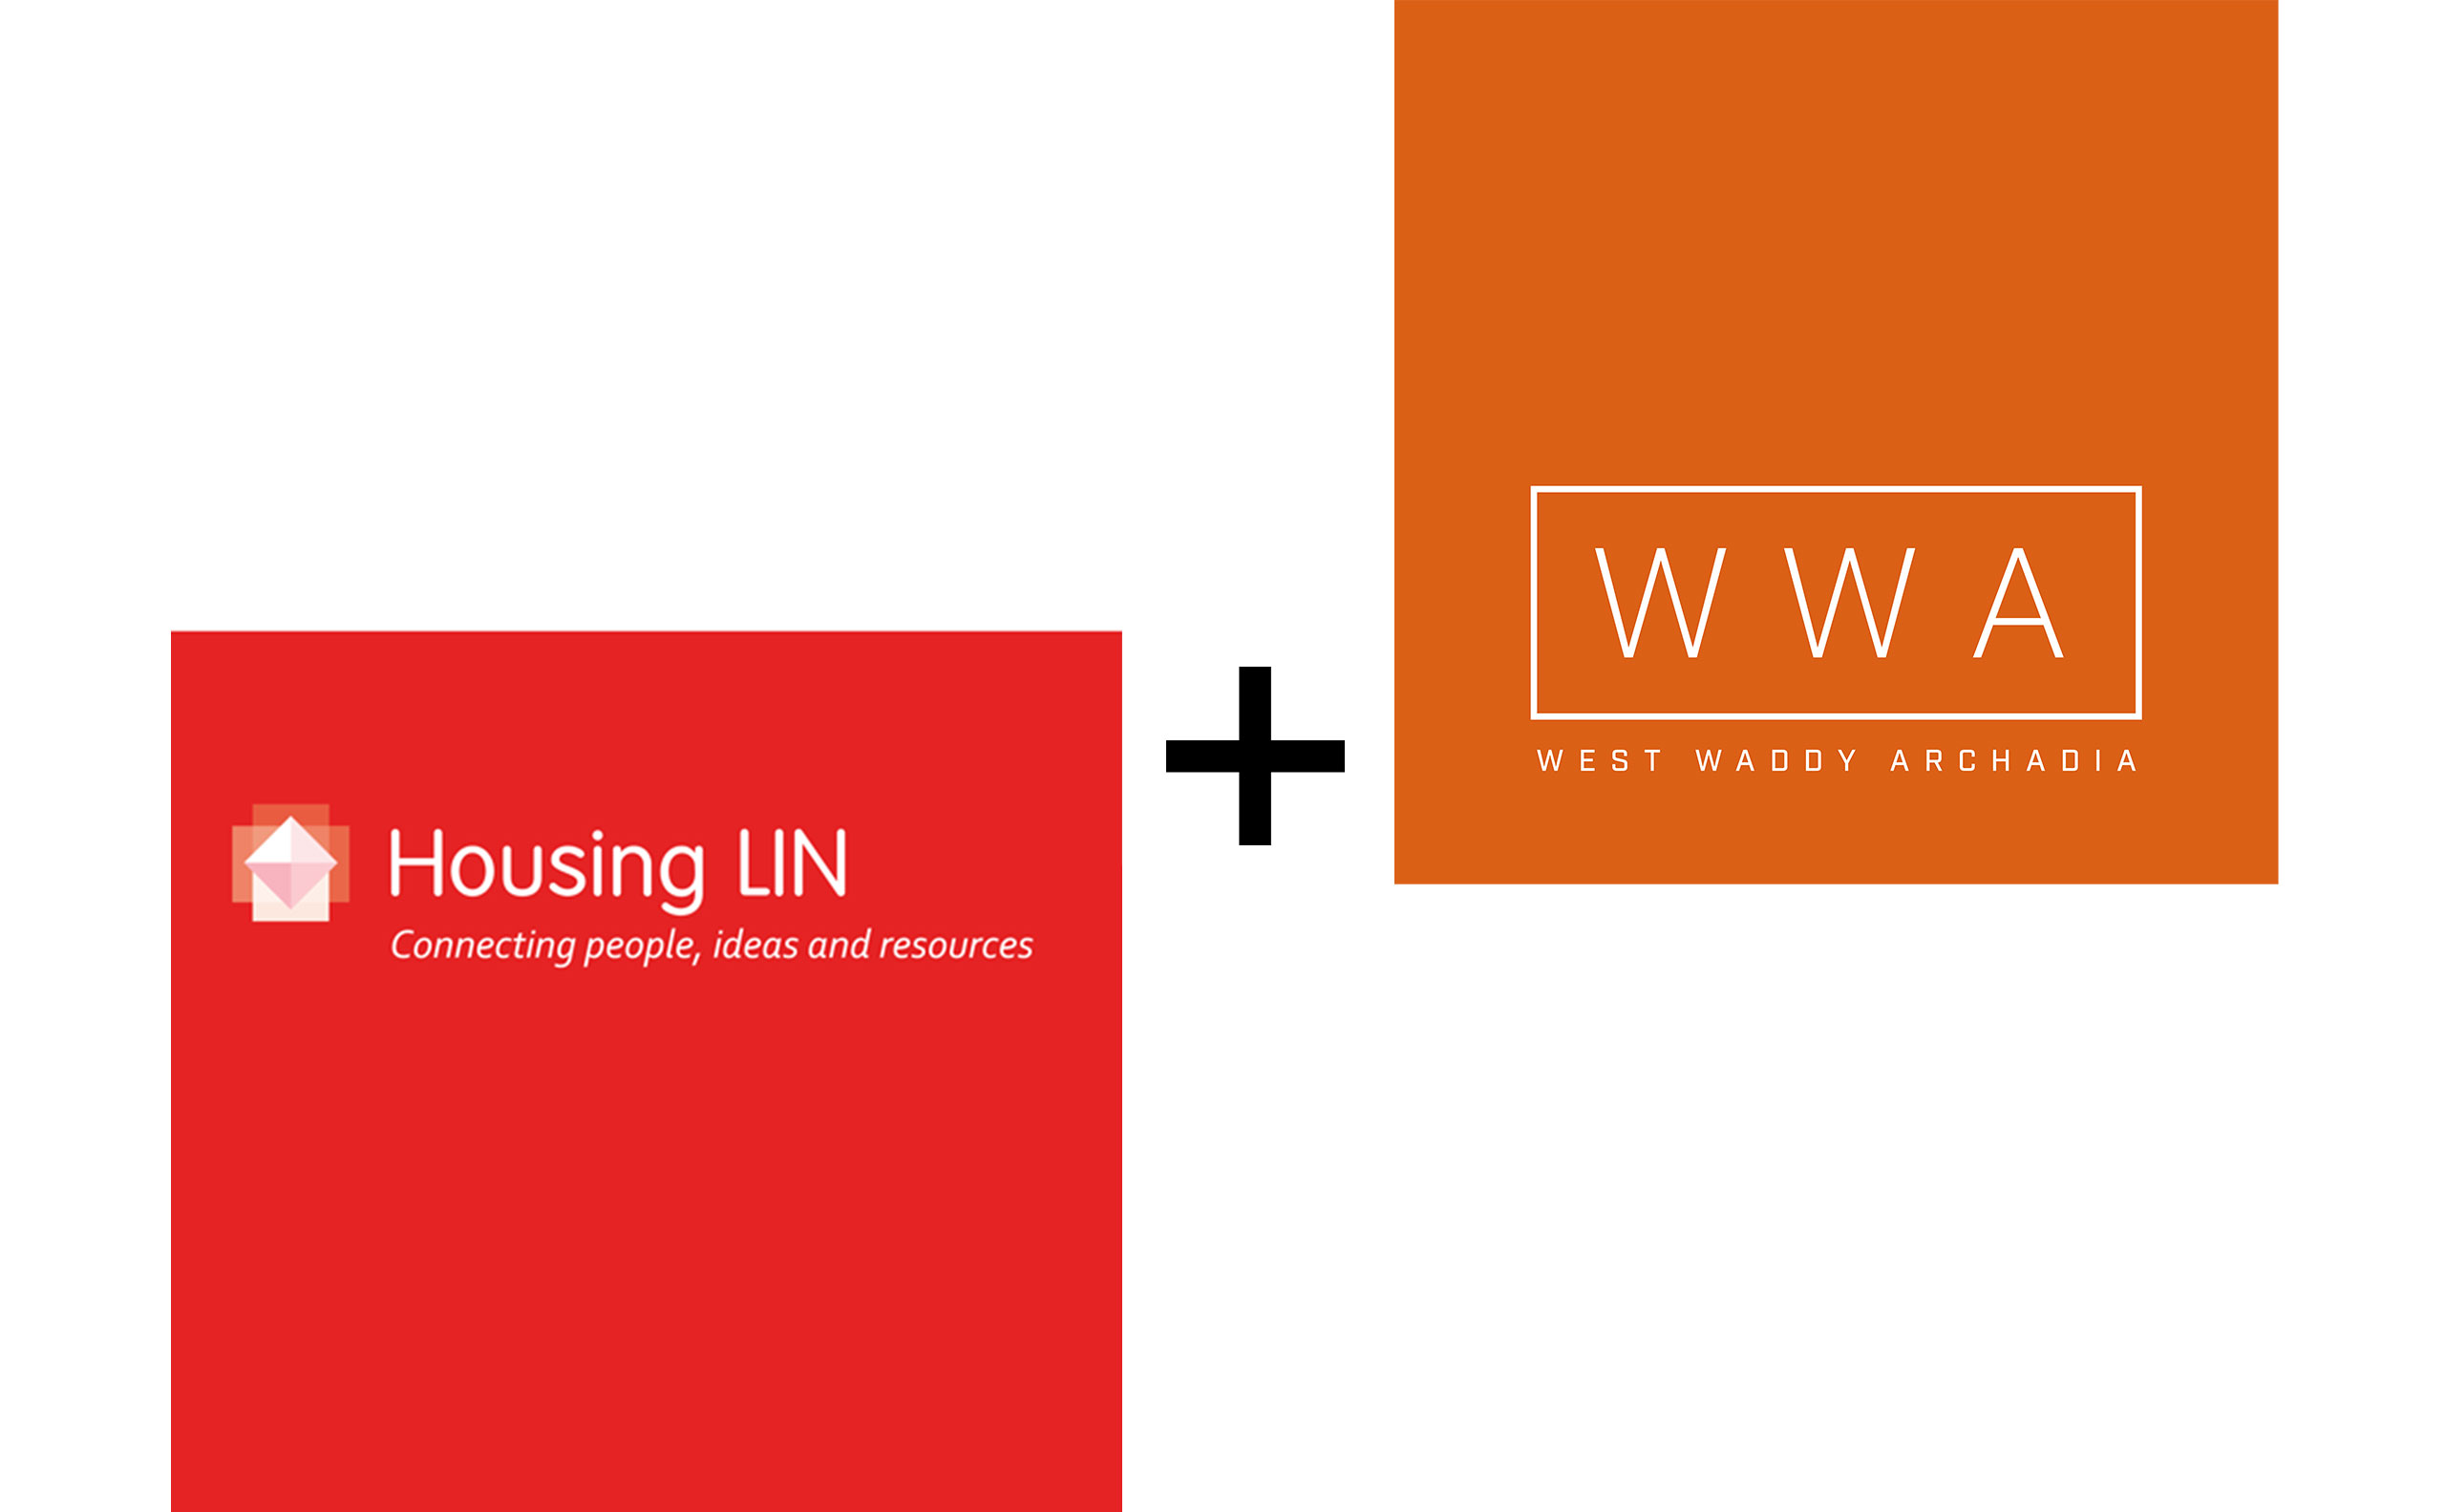 WWA, Housing LIN,